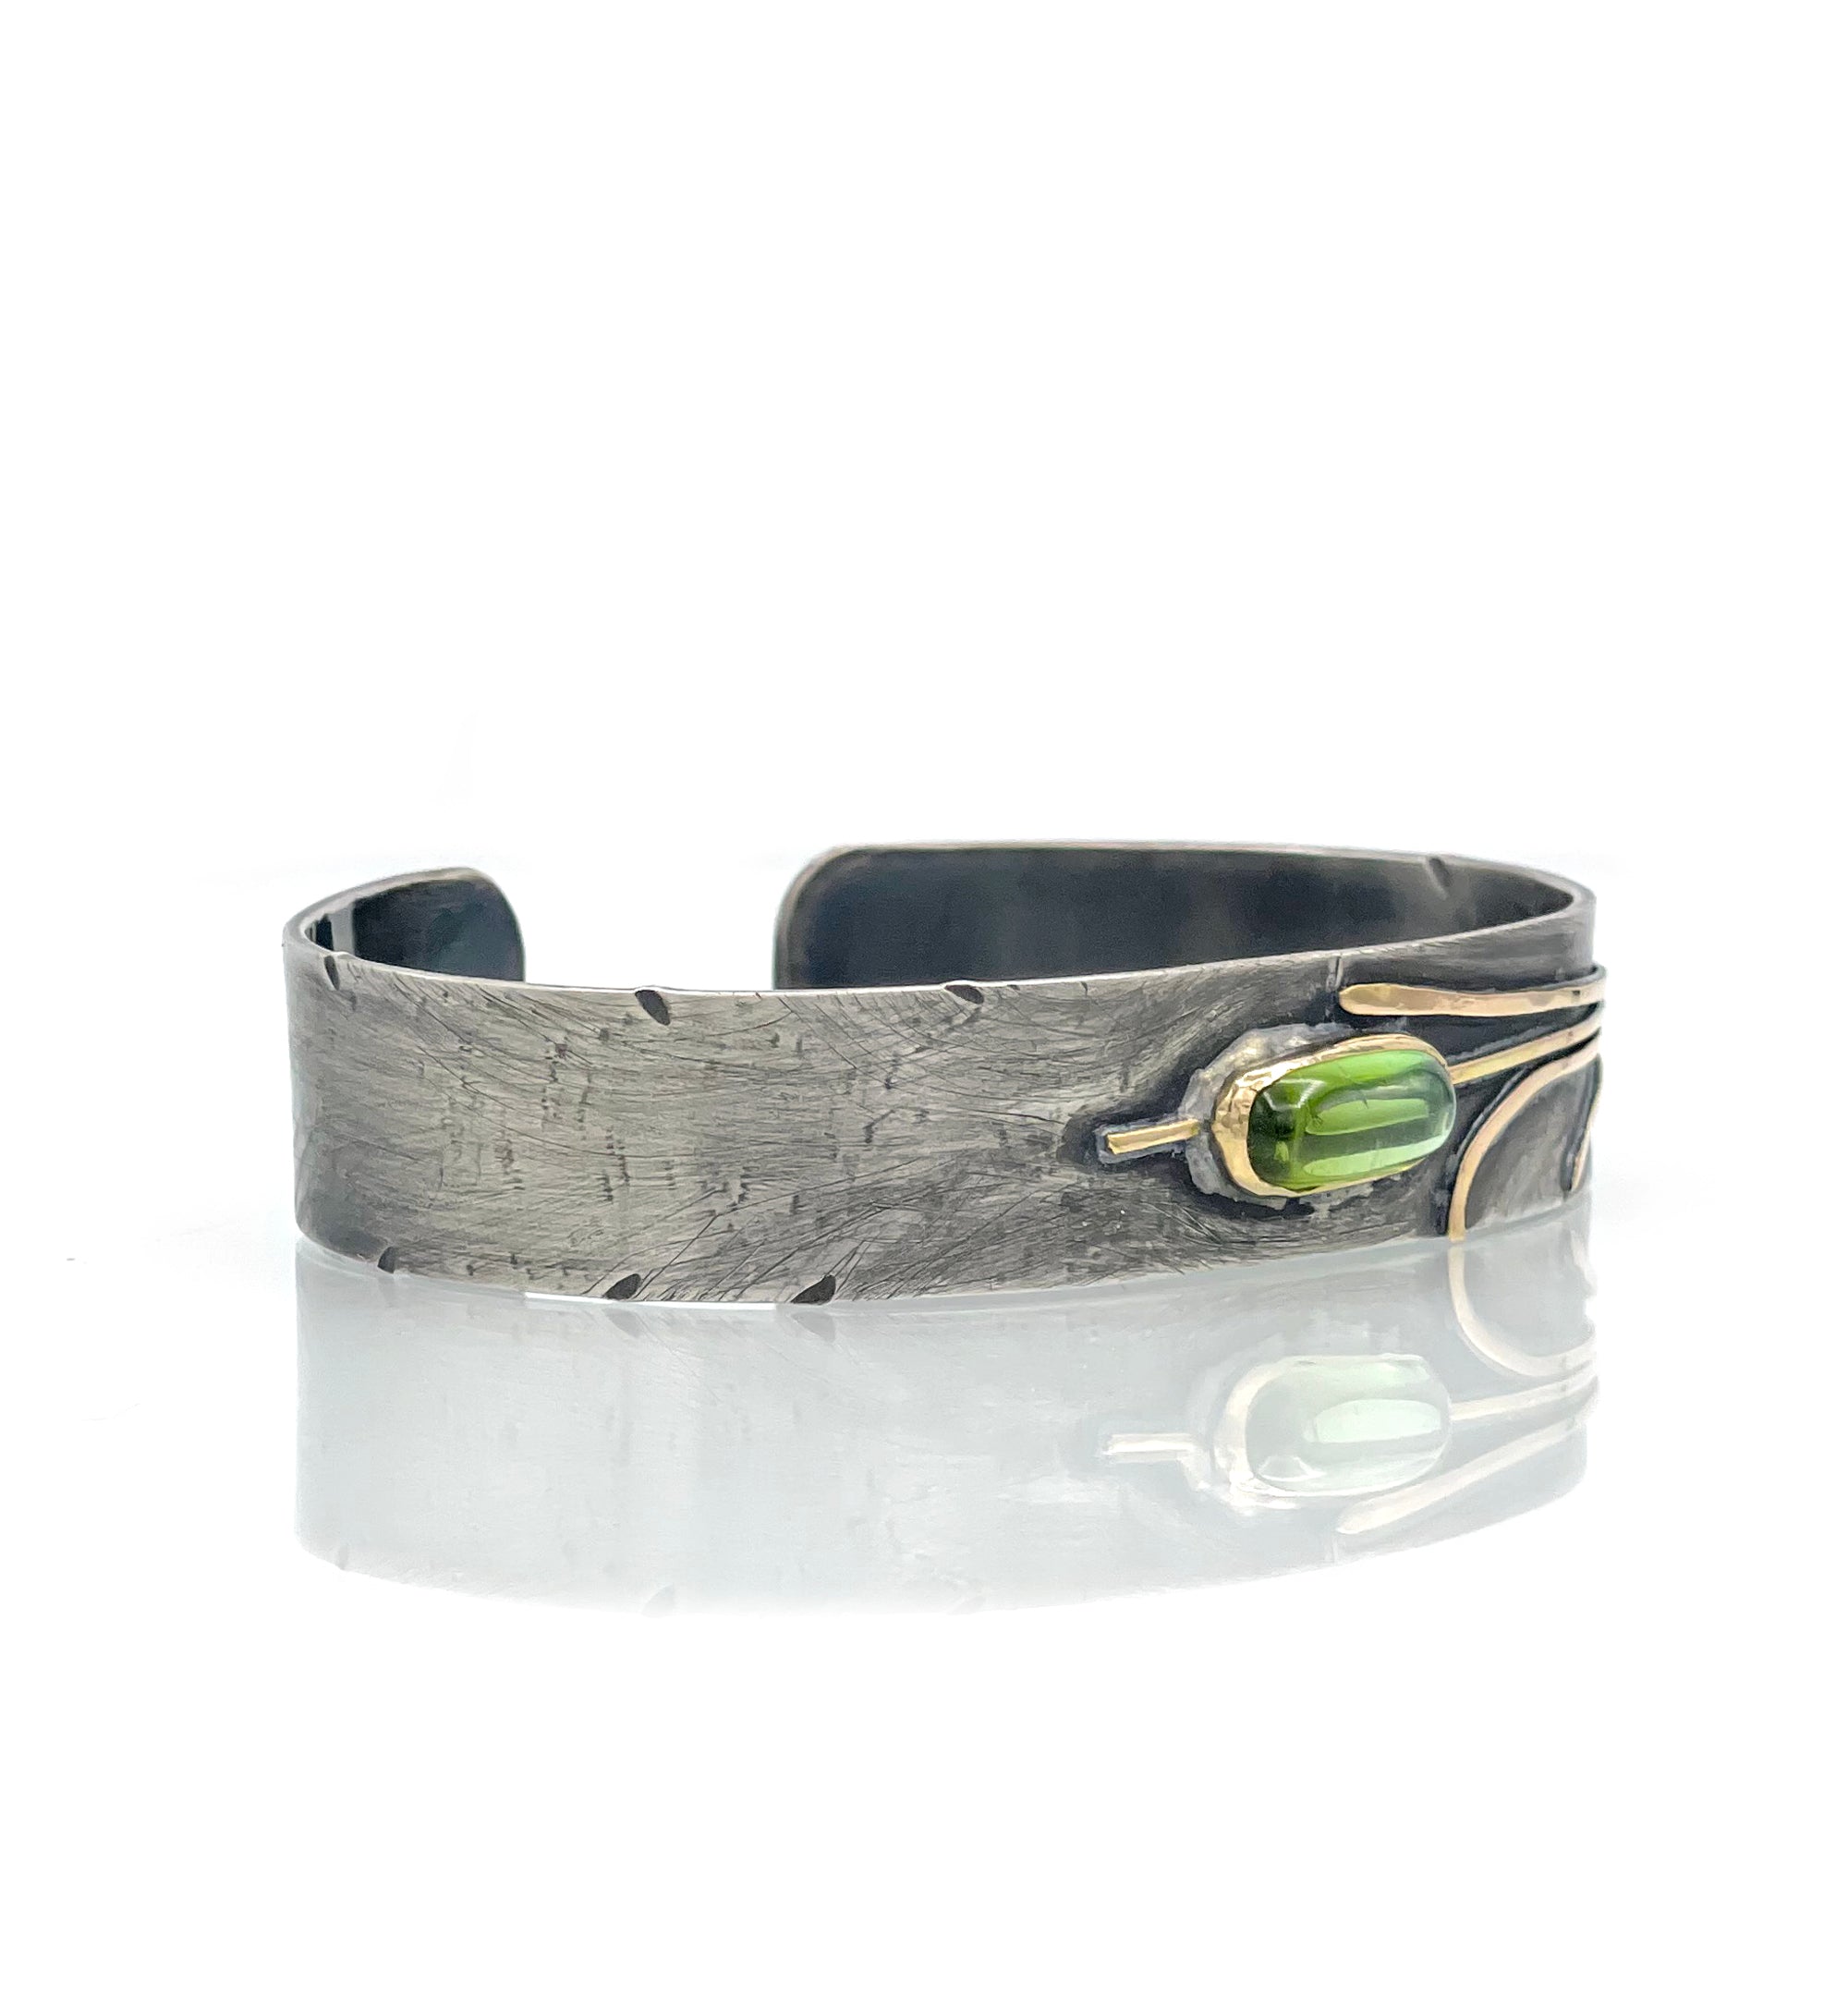 Green Tourmaline Cuff Bracelet, One of a kind, 14K Sterling Cattail Bracelet